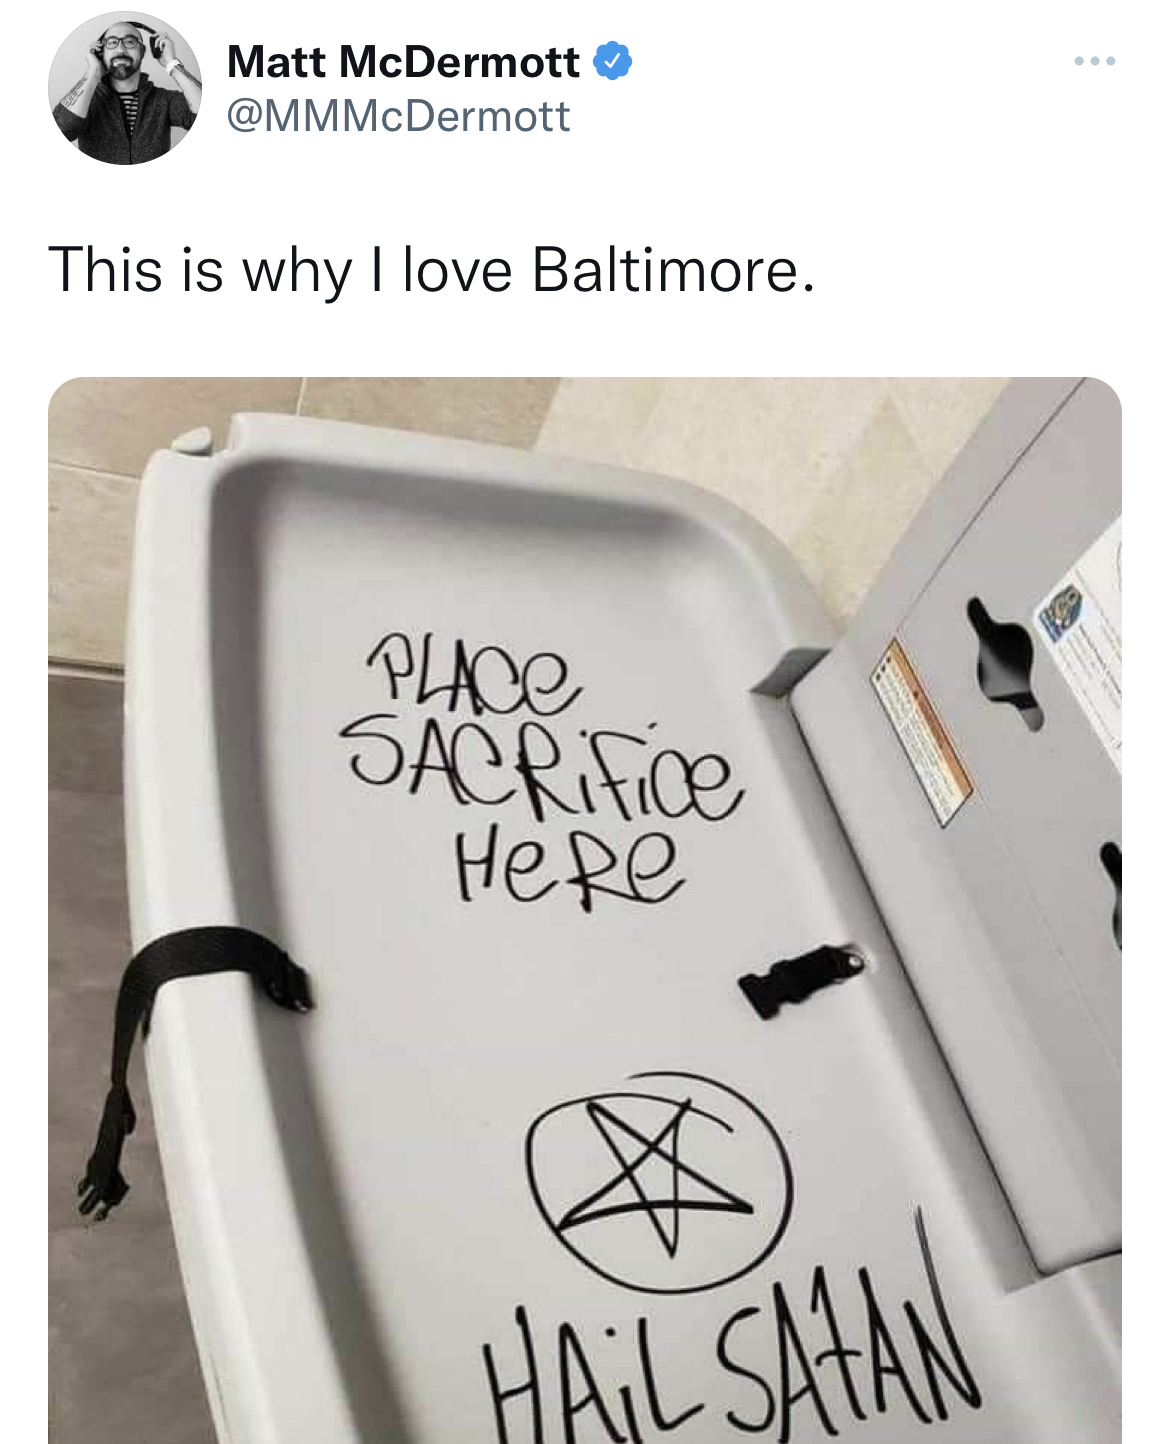 filthy and funny tweet - zbrojovka brno - Matt McDermott This is why I love Baltimore. Place Sacrifice Hail Satan